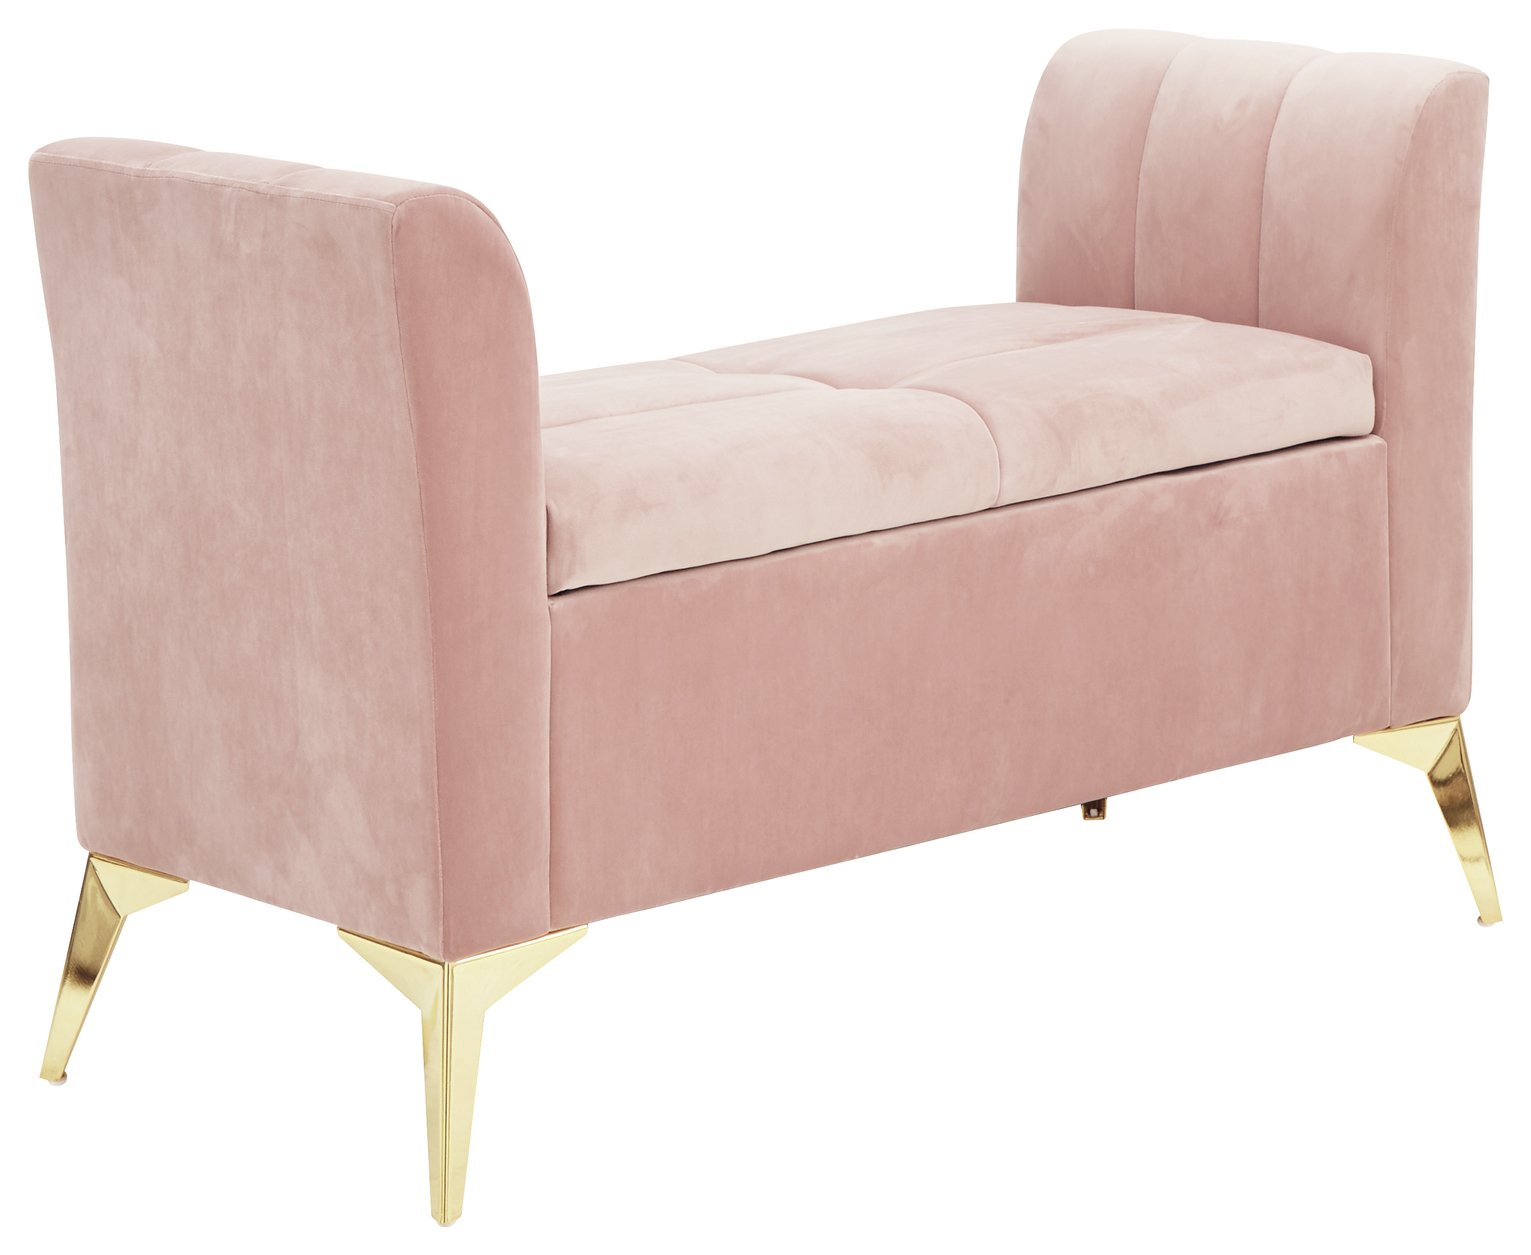 GFW Pettine Fabric Ottoman Storage Bench - Blush Pink